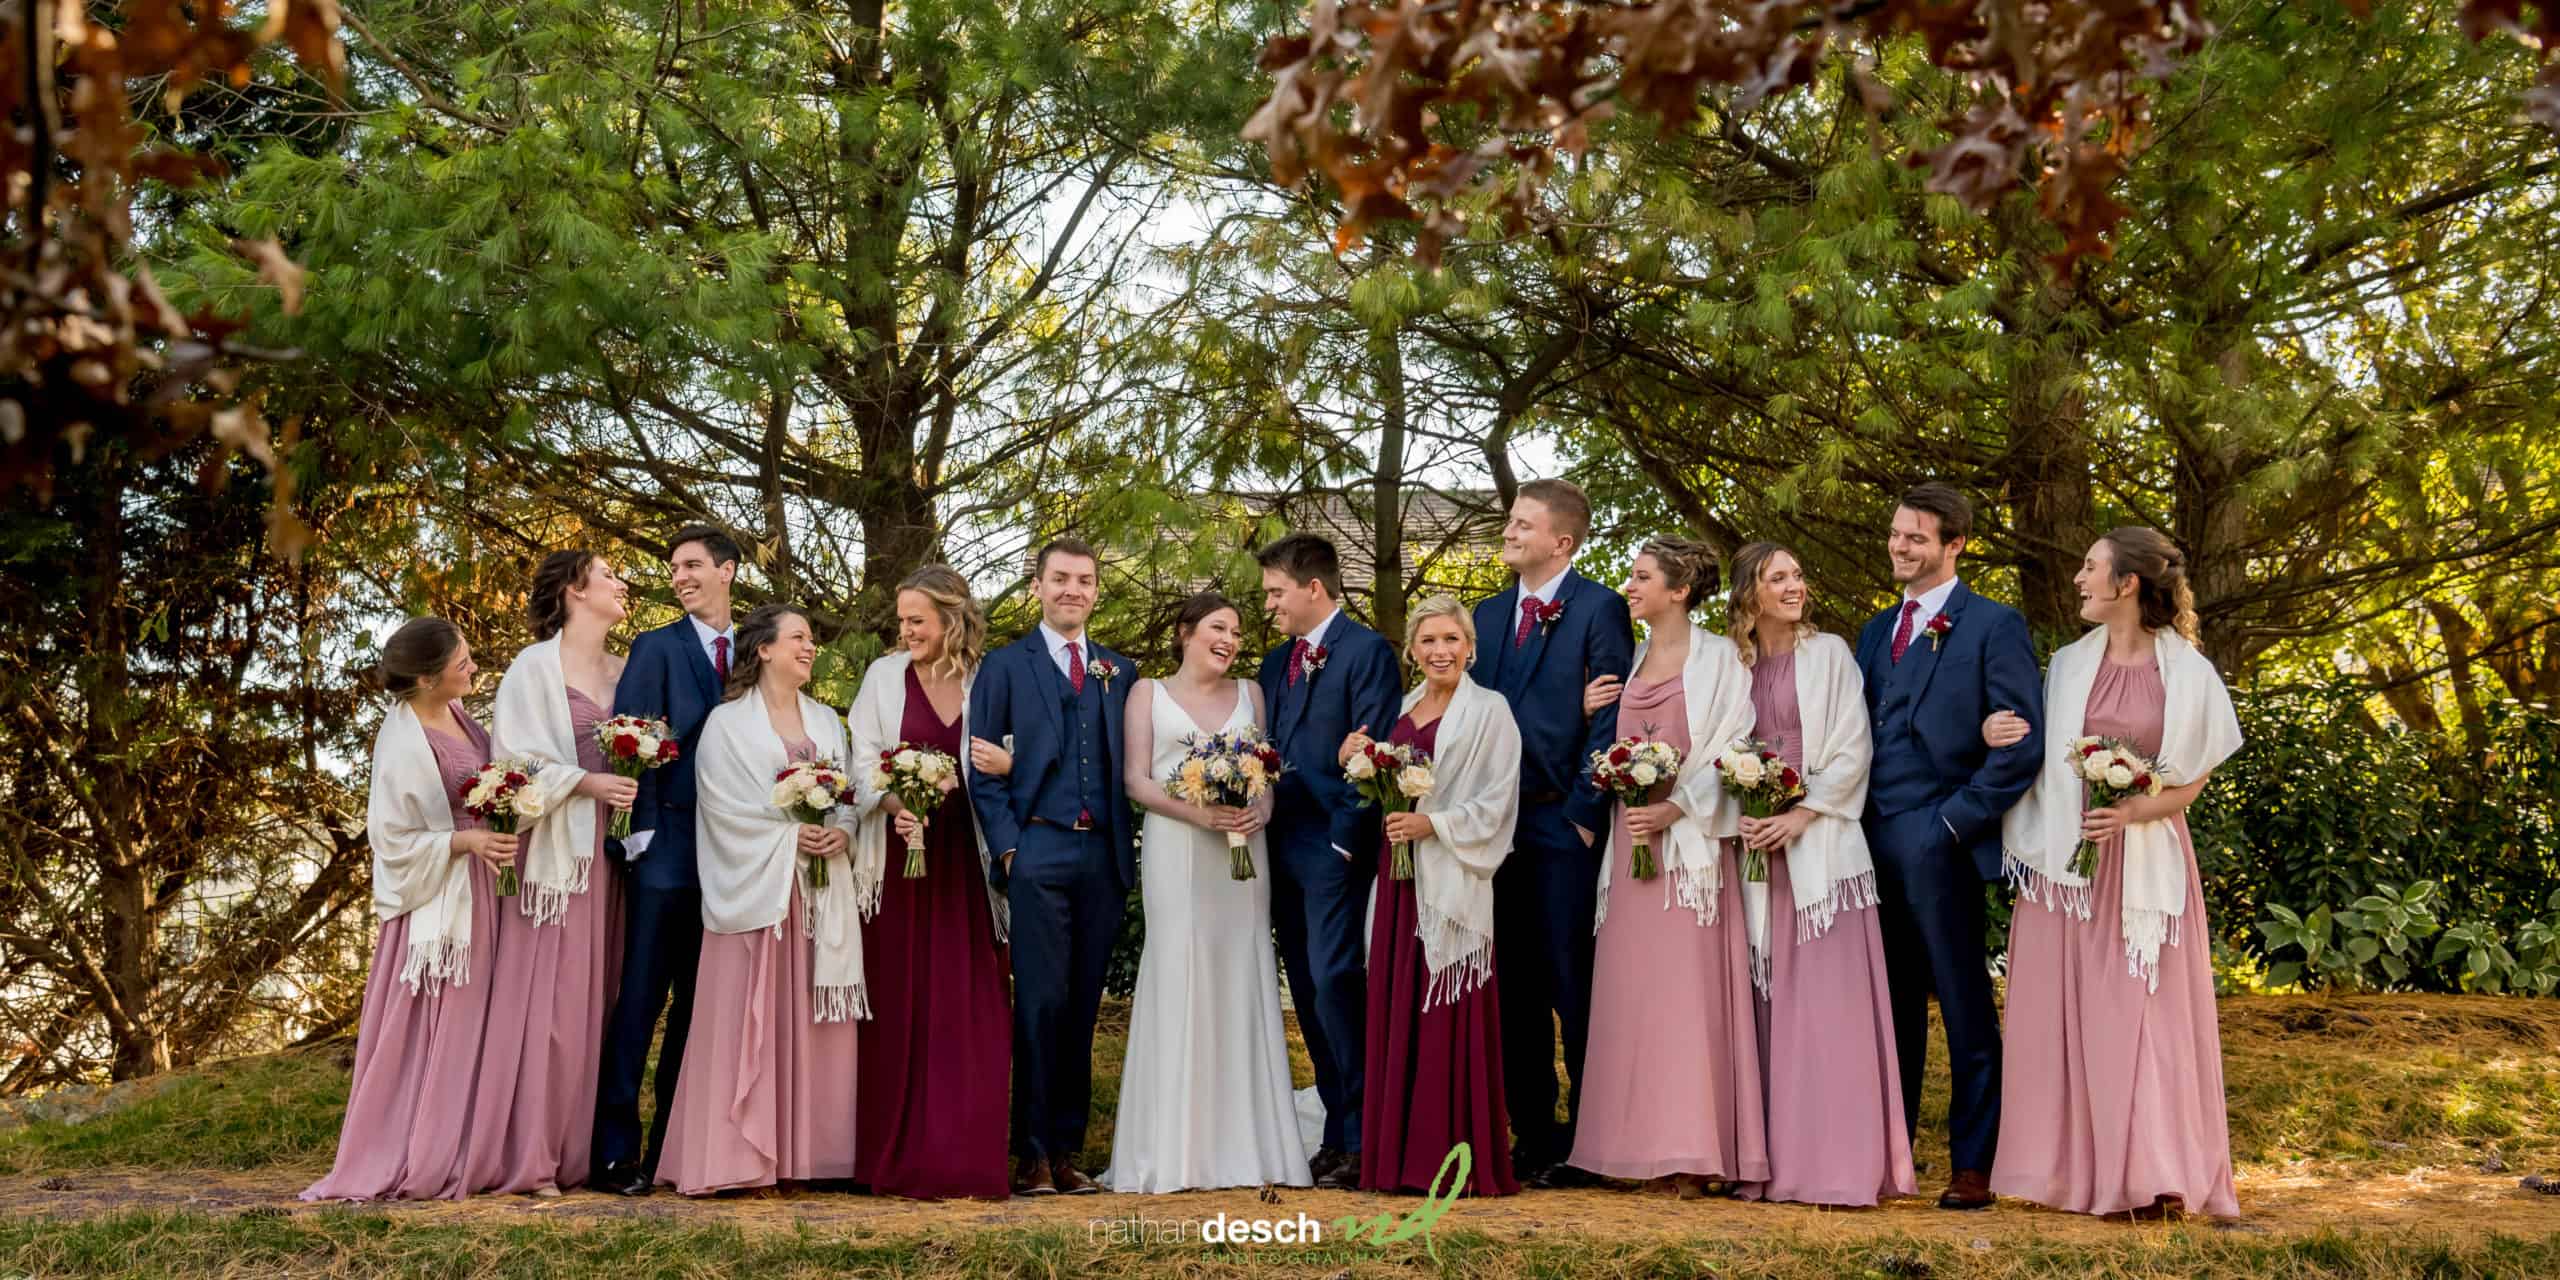 Best Wedding pictures of 2019